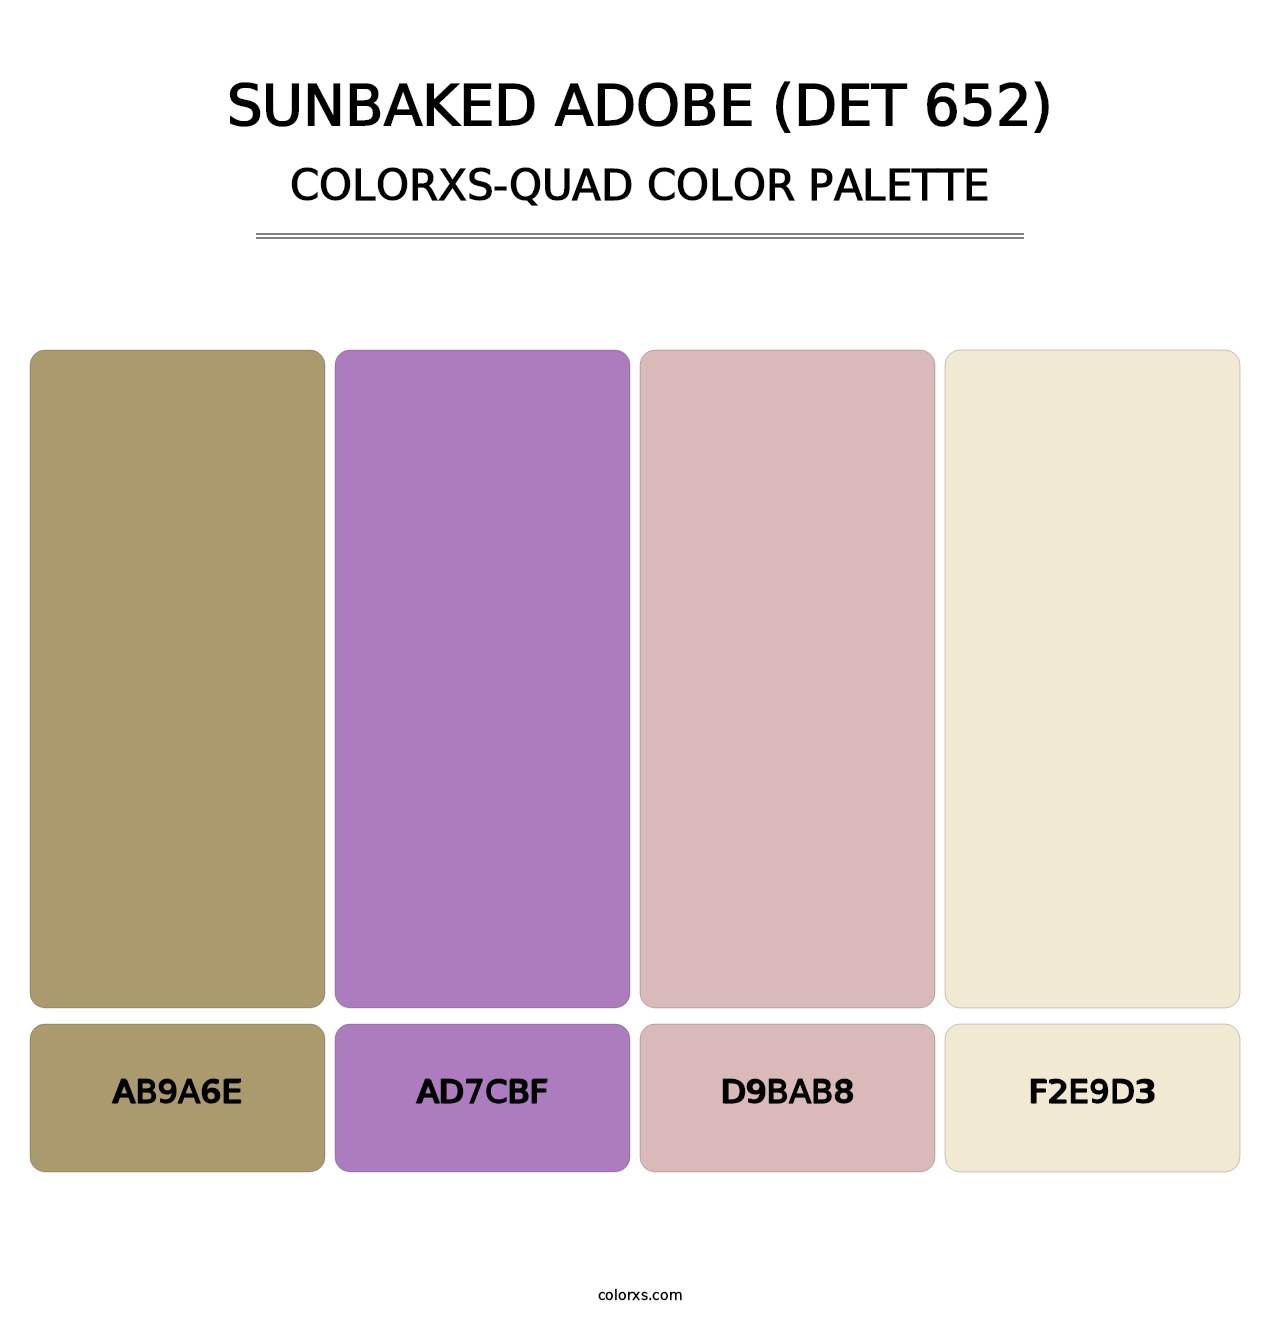 Sunbaked Adobe (DET 652) - Colorxs Quad Palette